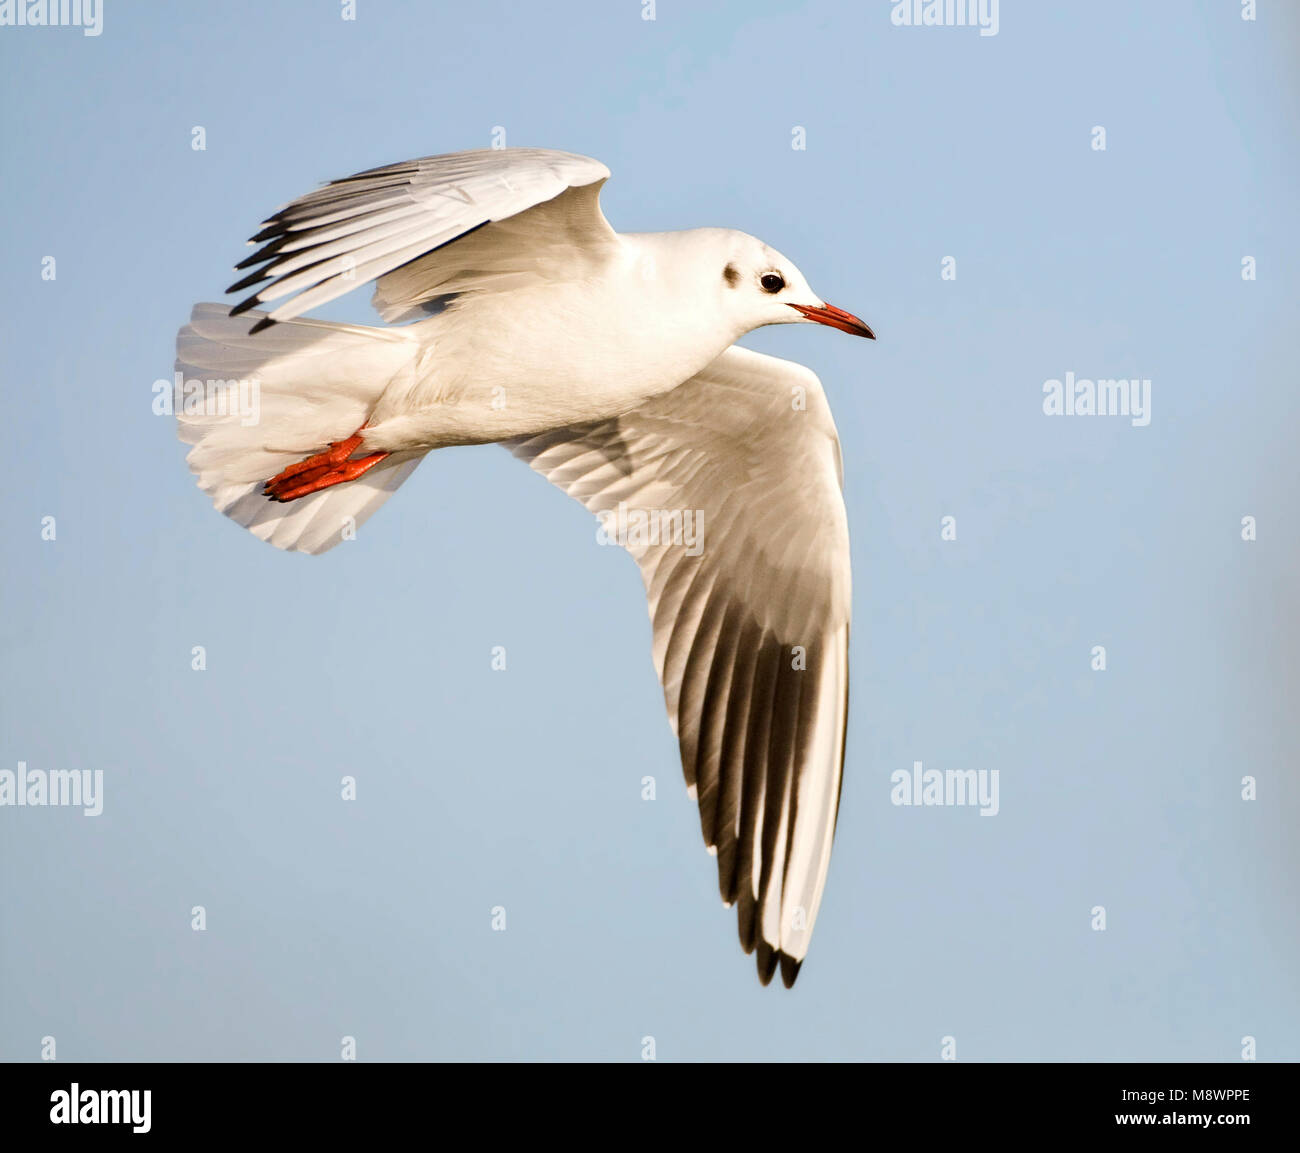 Winterkleed Kokmeeuw in vlucht; Winter plumage Black-headed Gull in flight Stock Photo